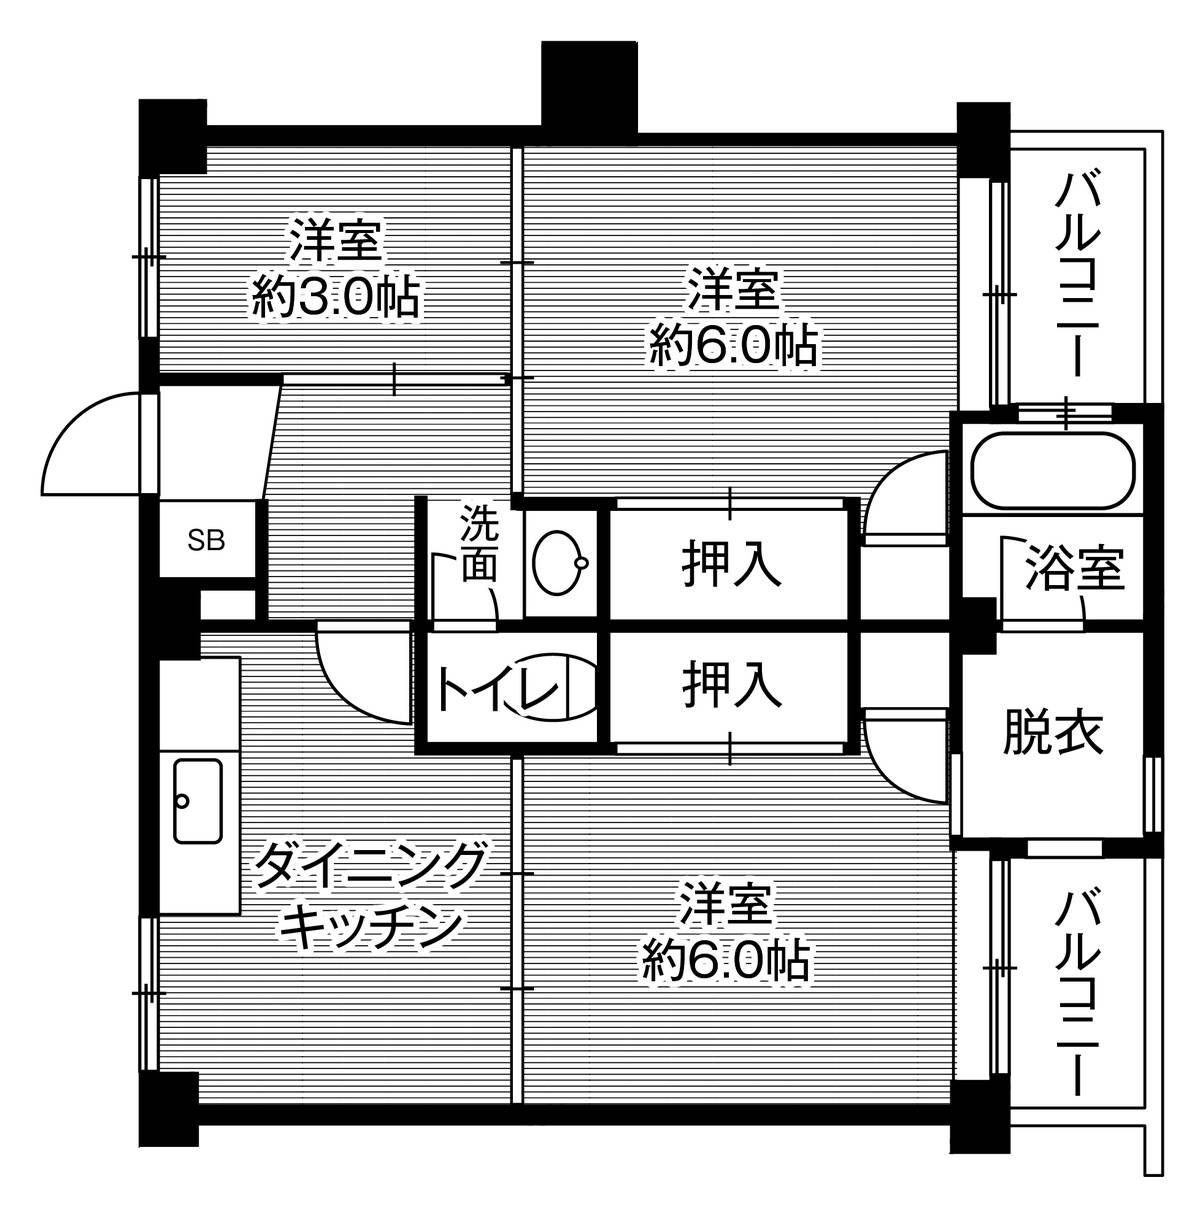 3DK floorplan of Village House Koga in Koga-shi